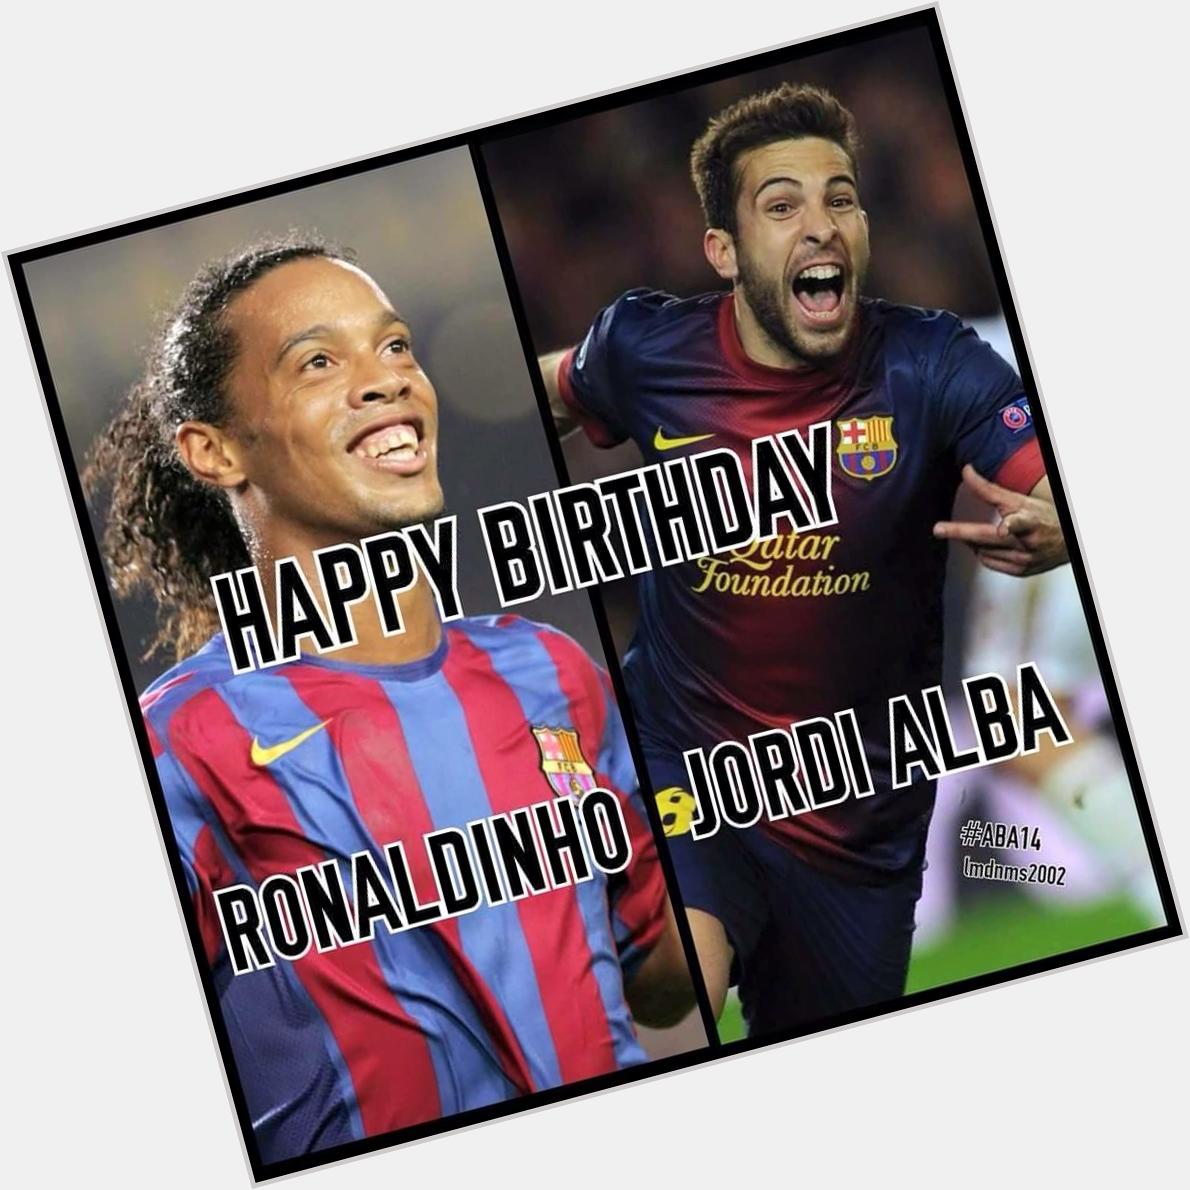       Happy Birthday Ronaldinho Gaúcho & Jordi Alba          